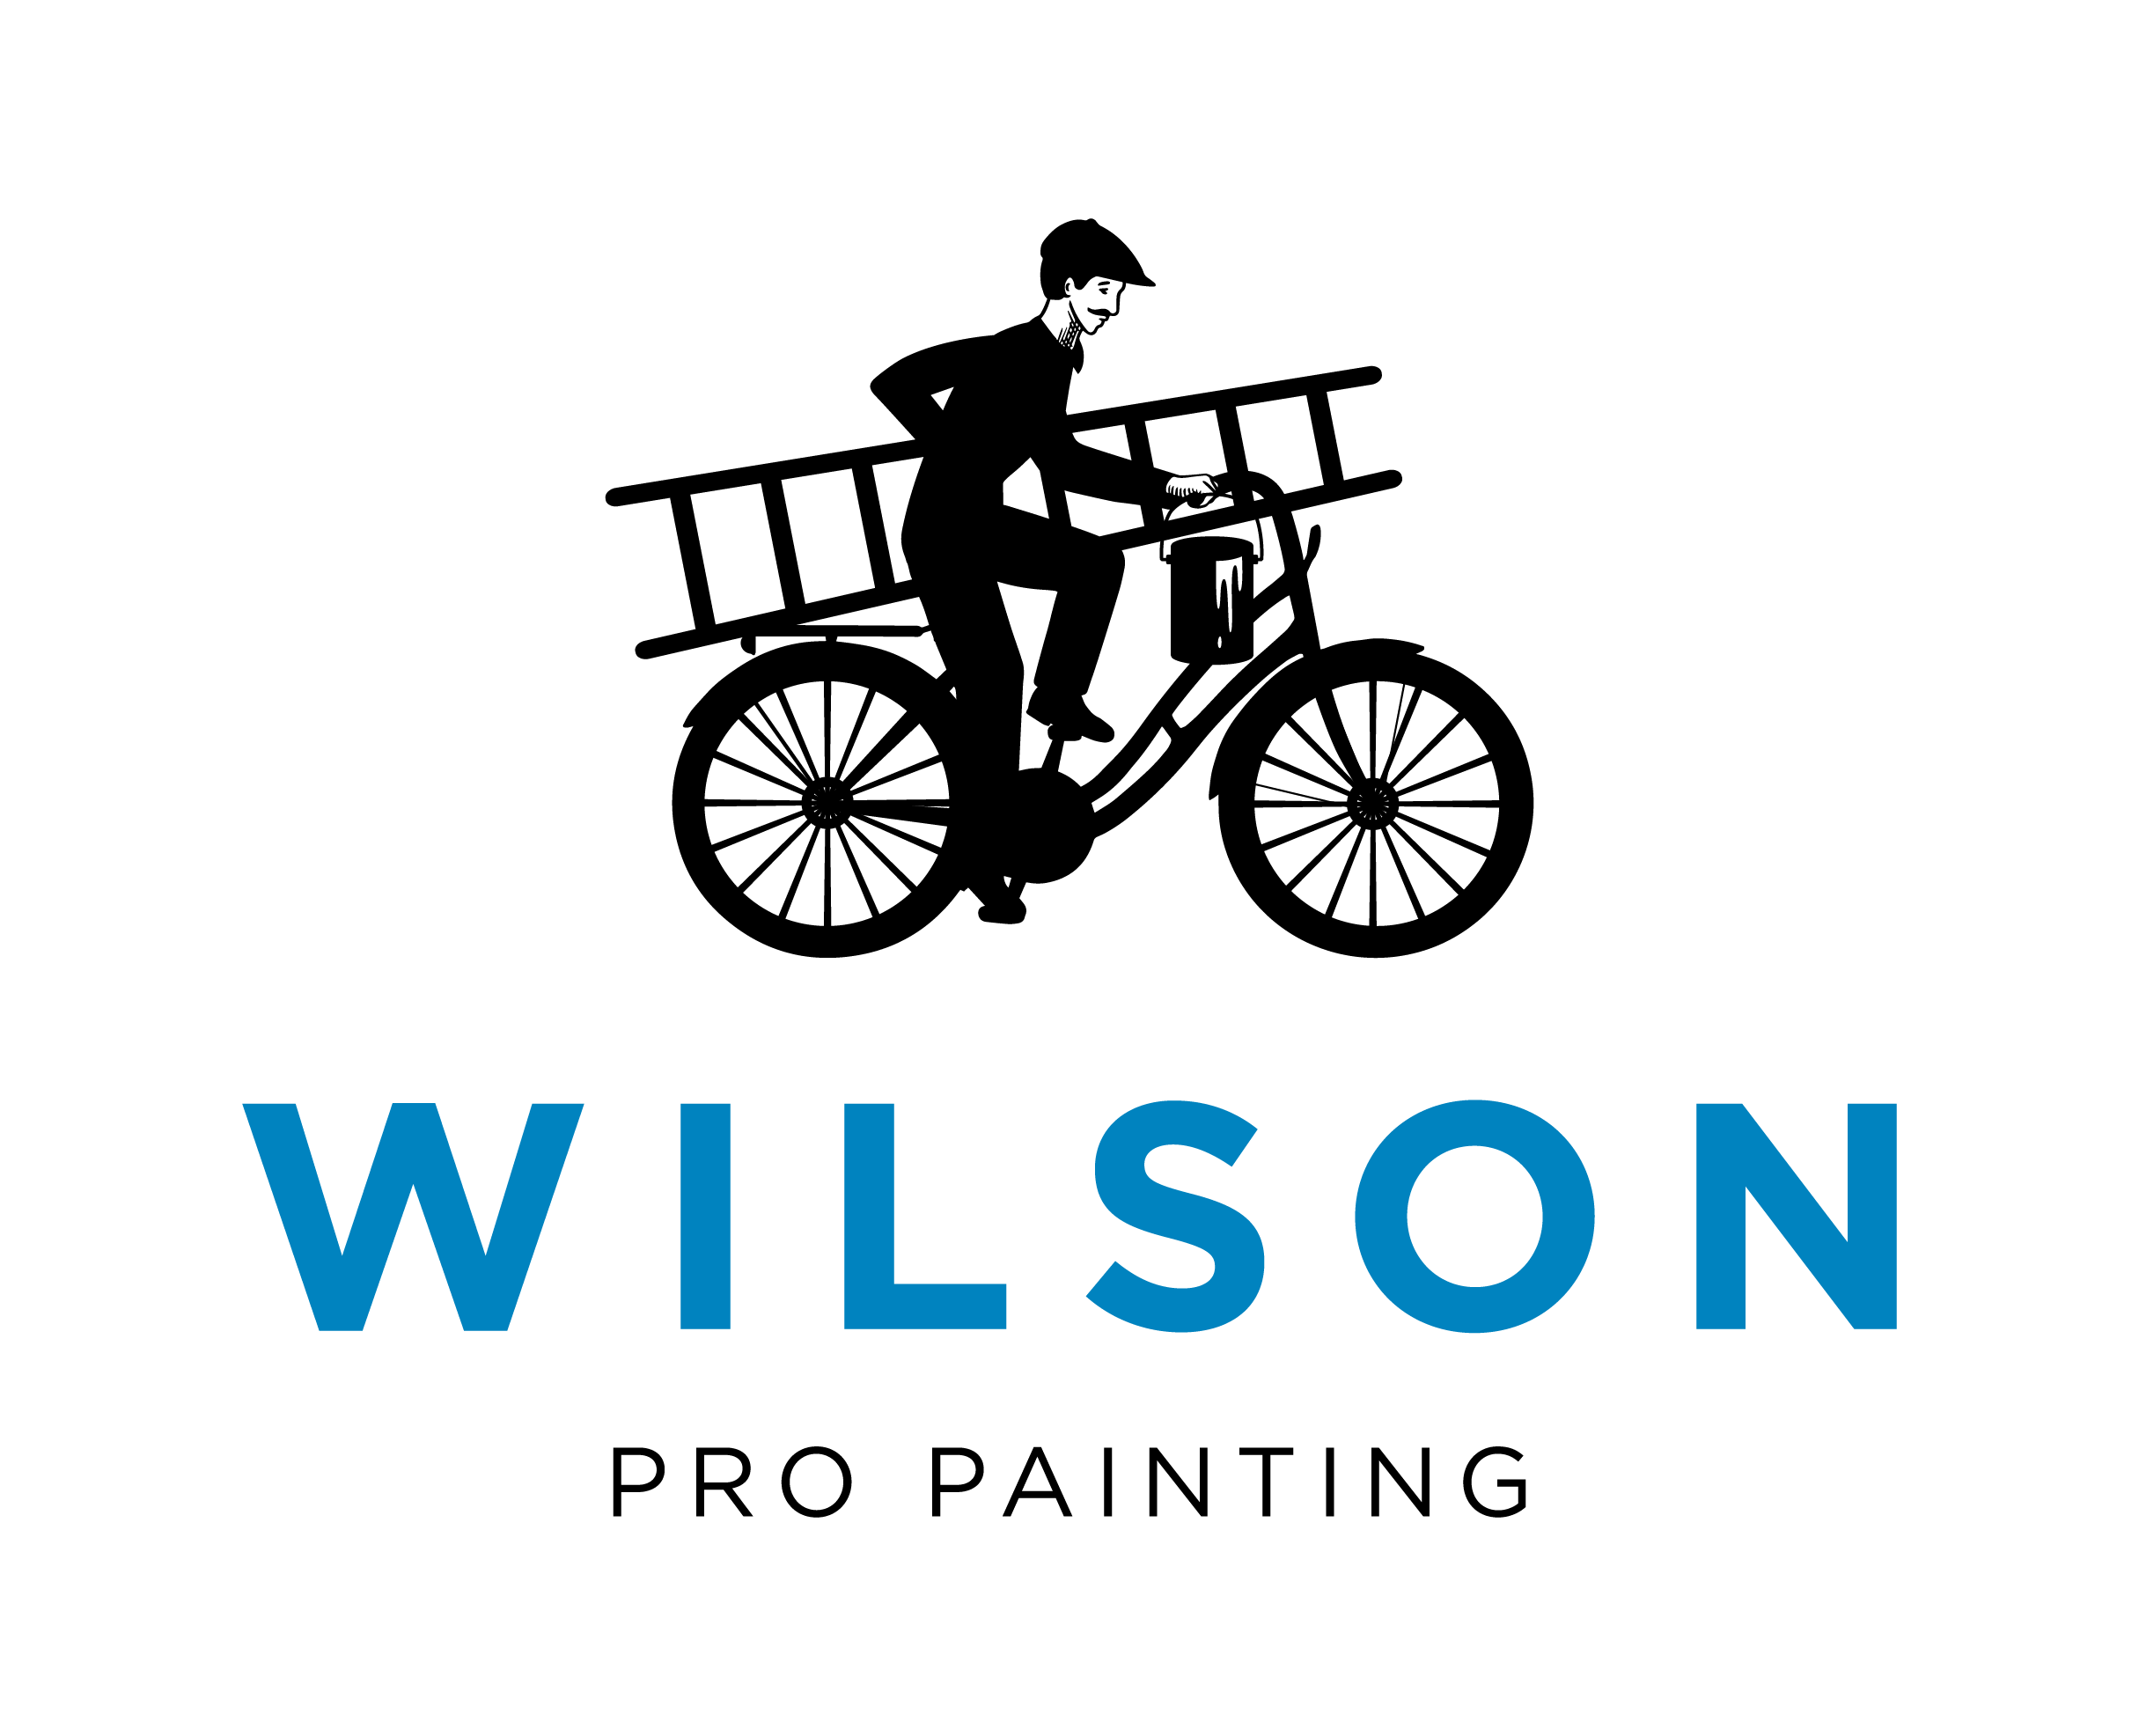 Wilson Pro Painting logo